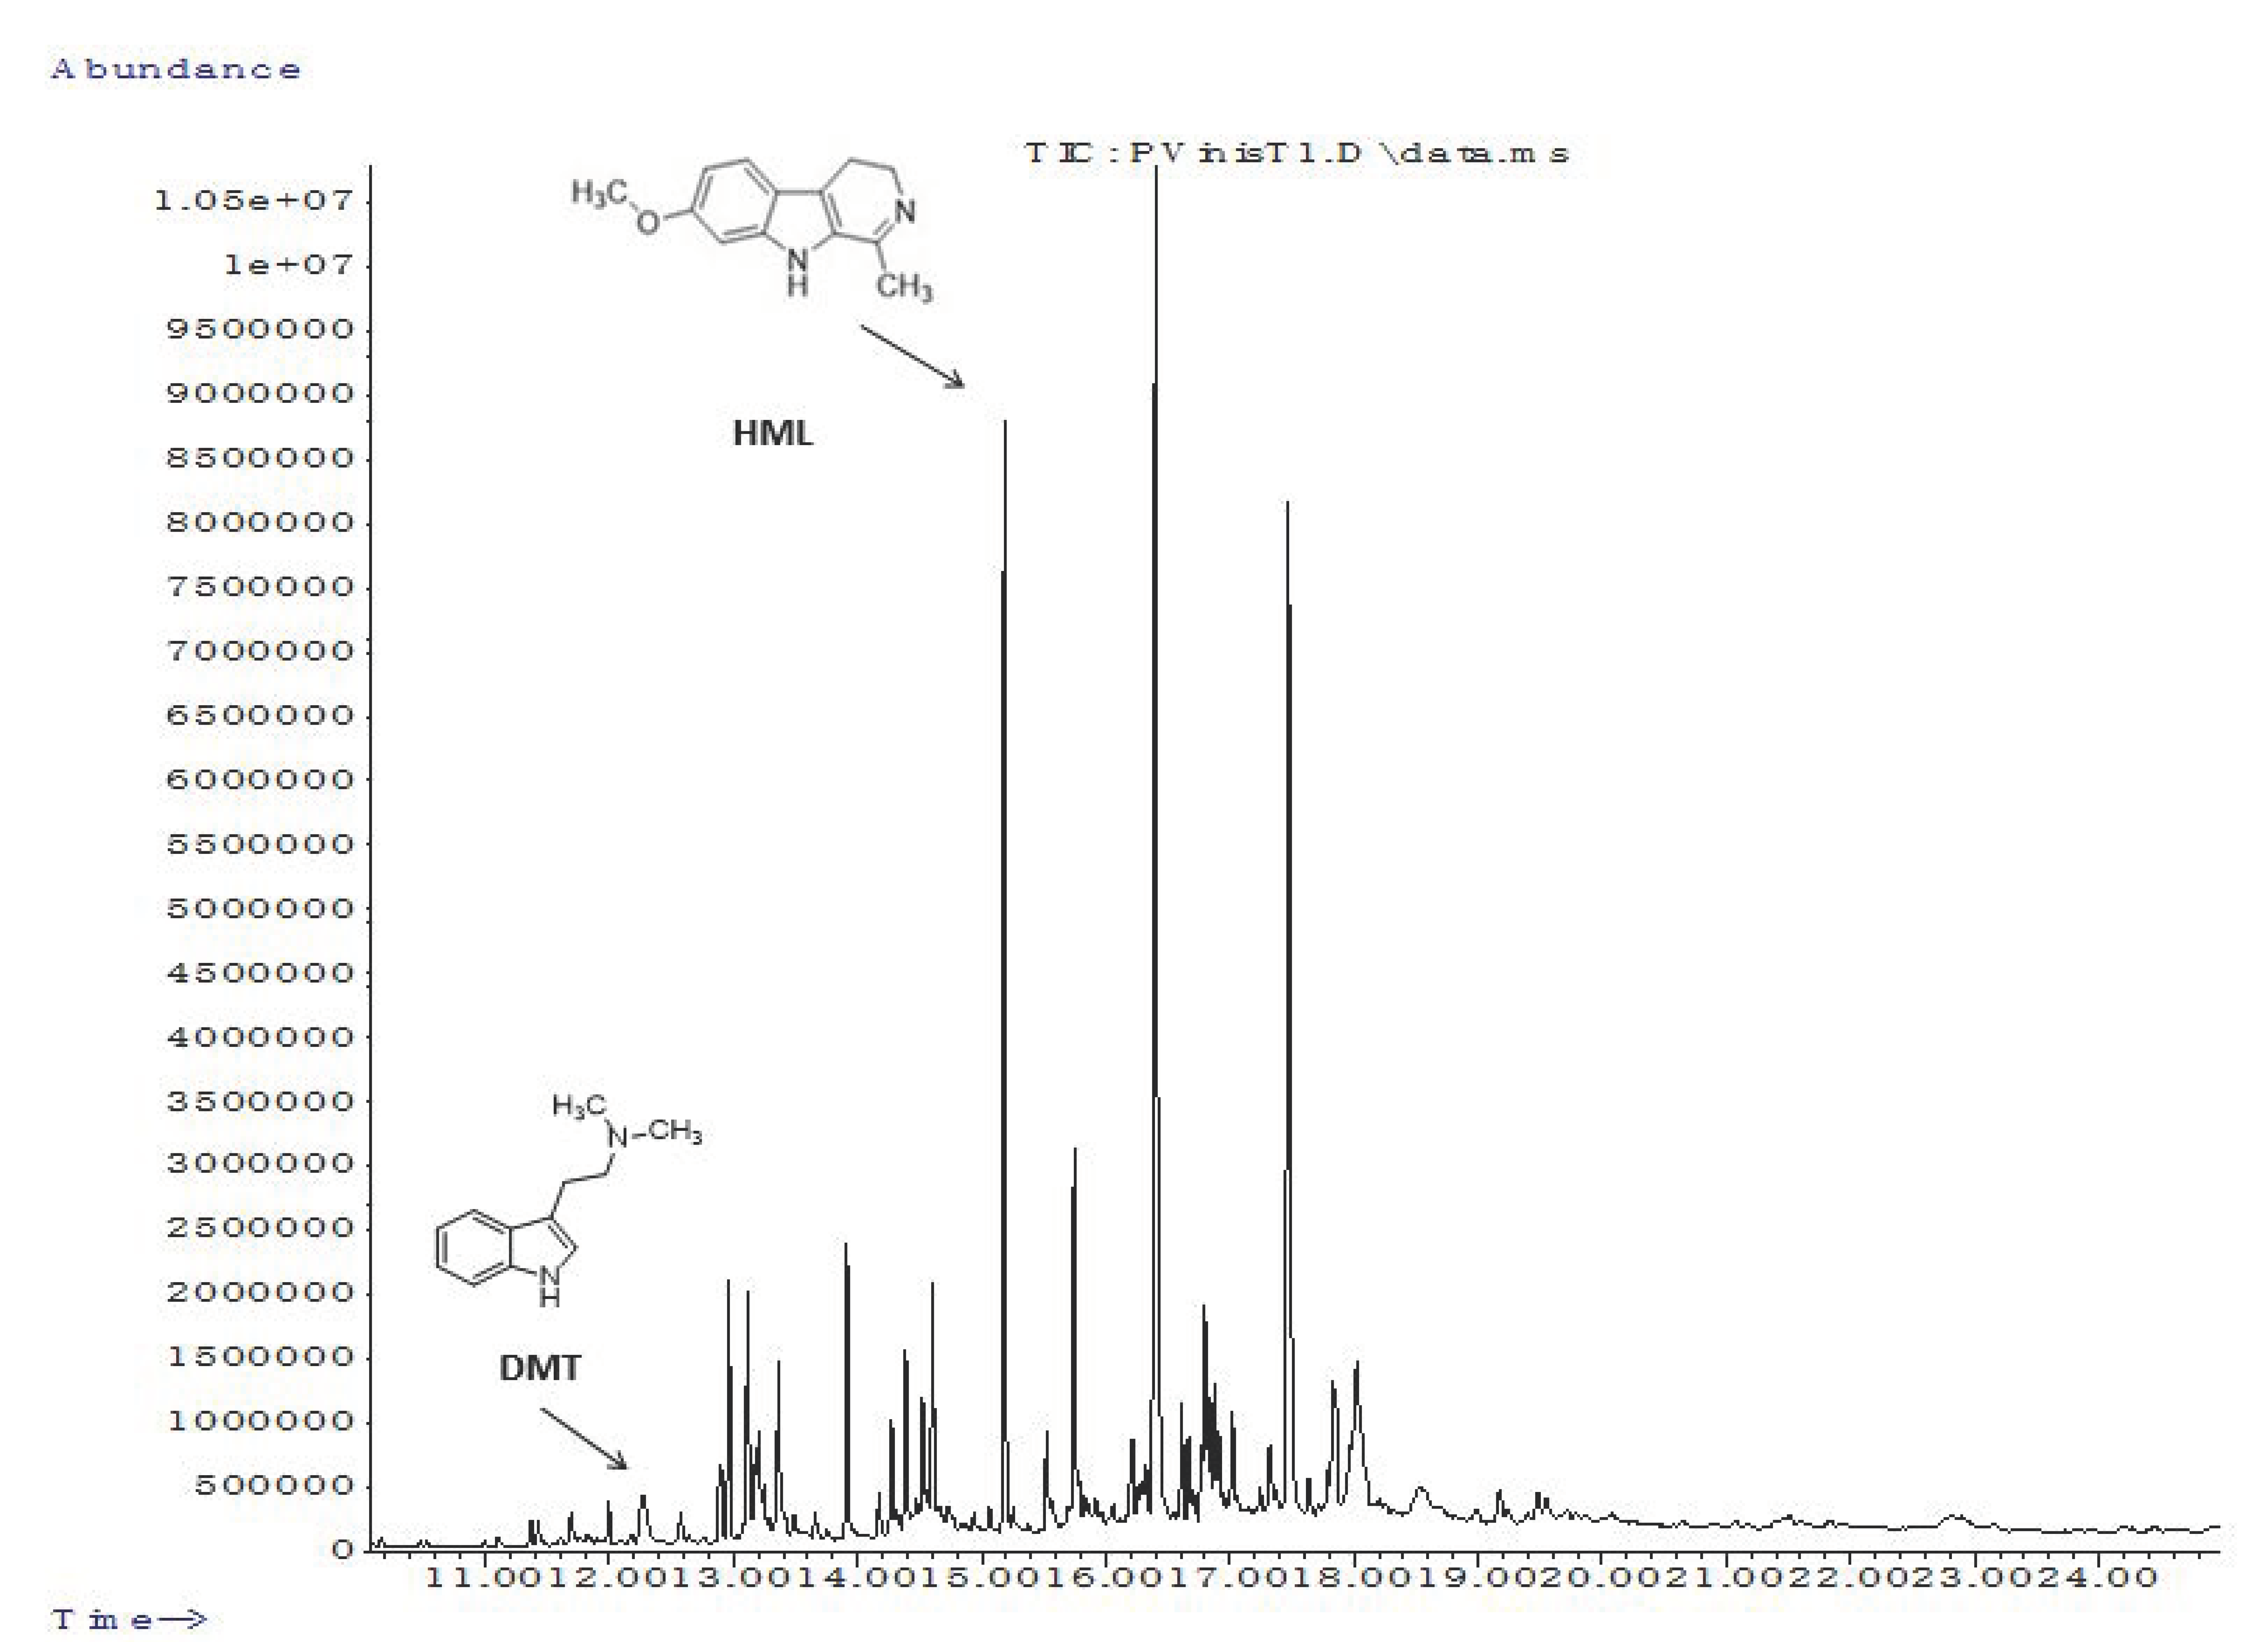 Pierce™ Dimethylsulfoxide (DMSO), LC-MS Grade